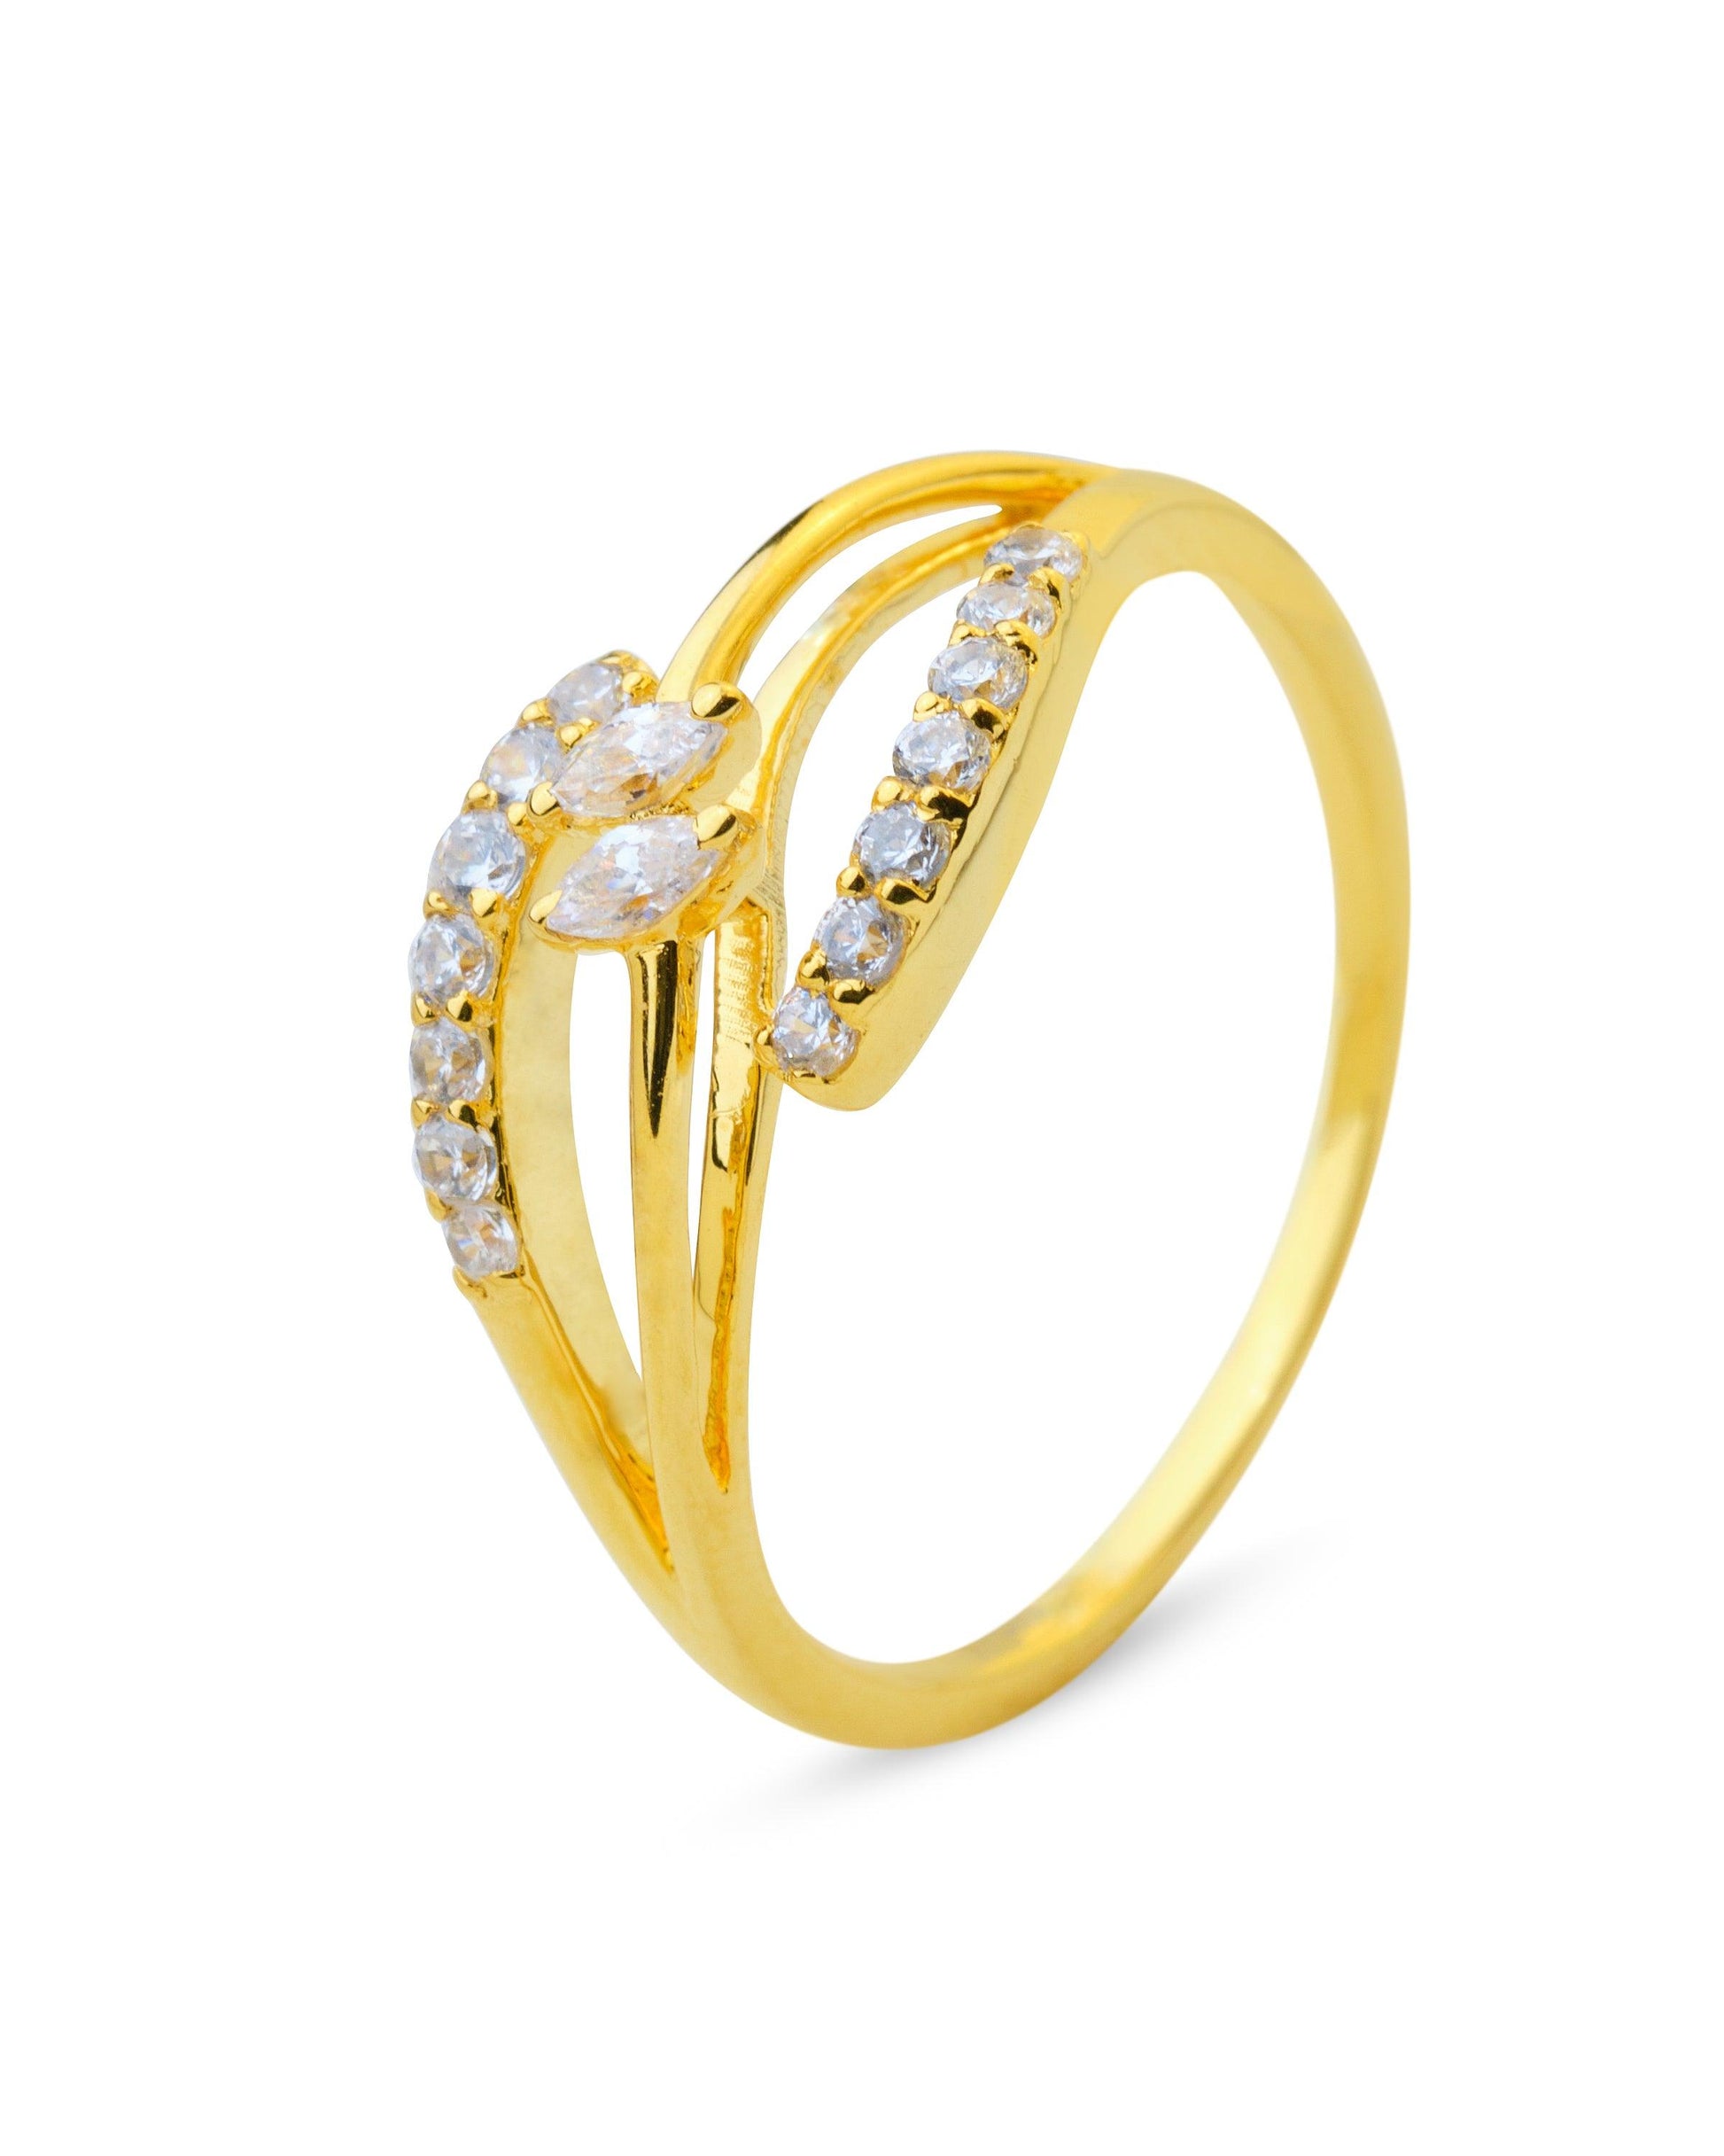 Shimmery Cross-over Gold & Diamond Ring - Chandrani Pearls